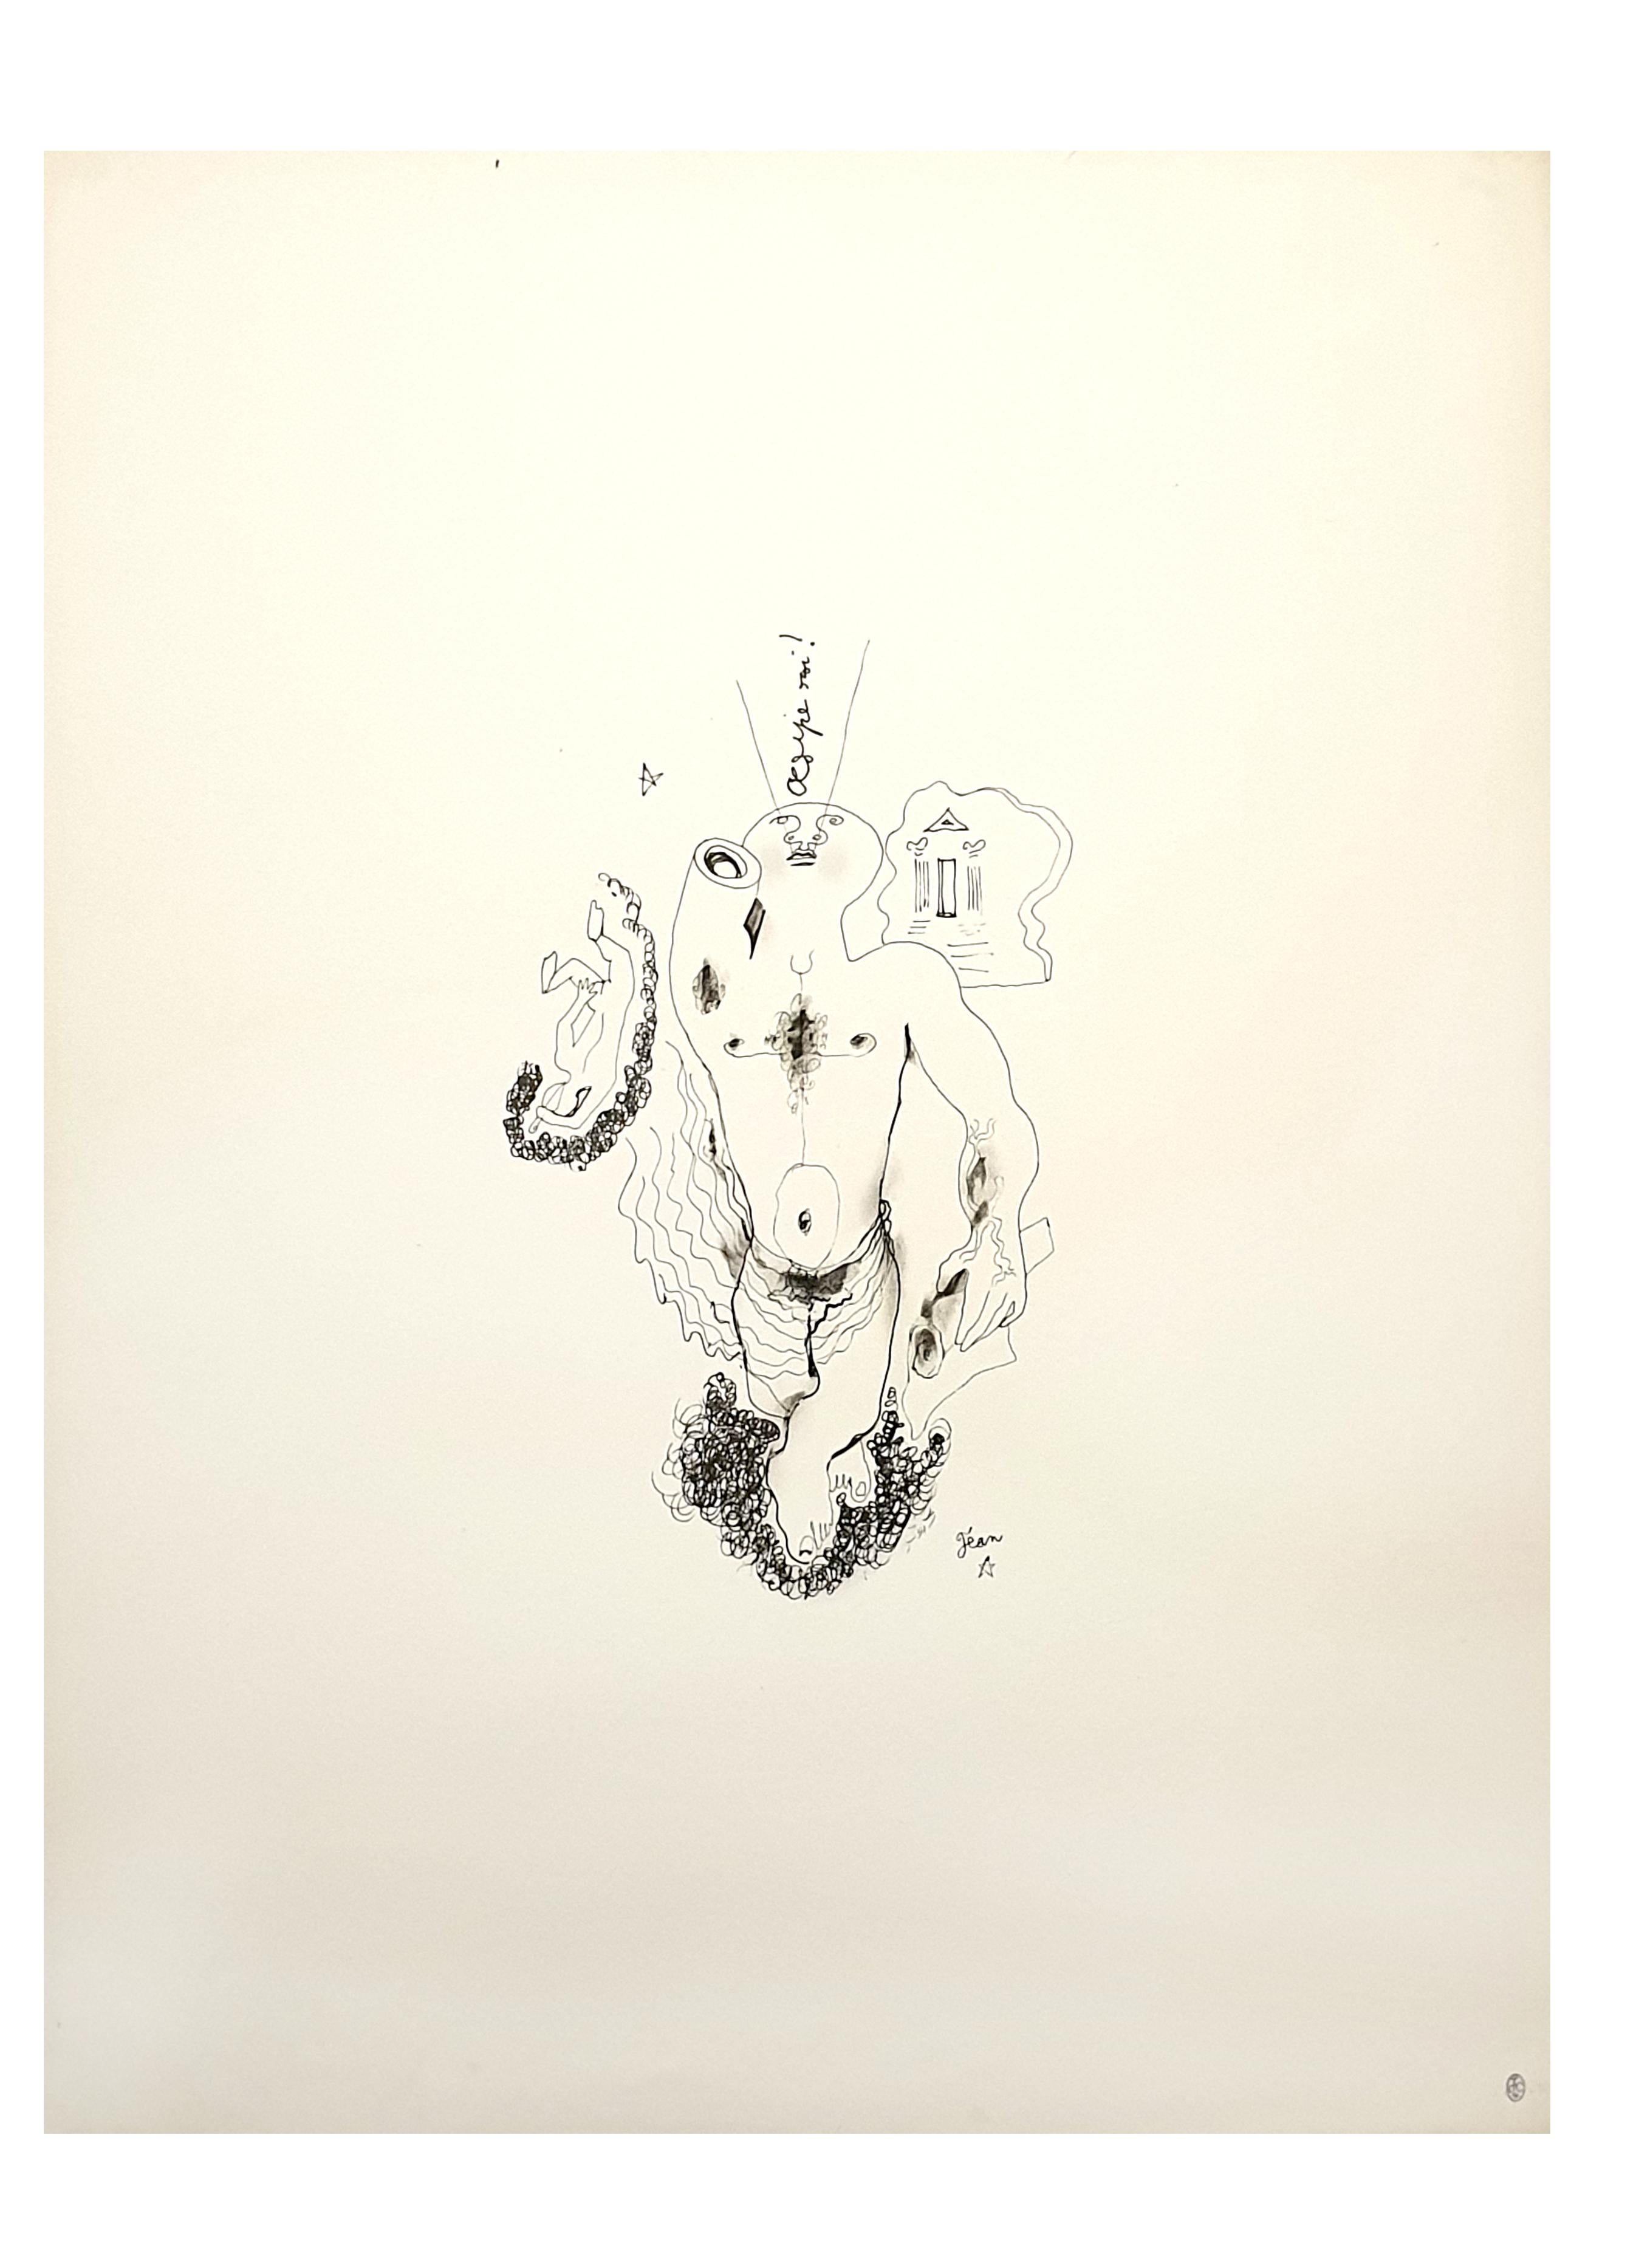 Jean Cocteau - King Oedipus - Original Lithograph
1956
Signed in the plate
Dimensions: 66 x 50 cm
Provenance : Succession Dermit, Cocteau's heir